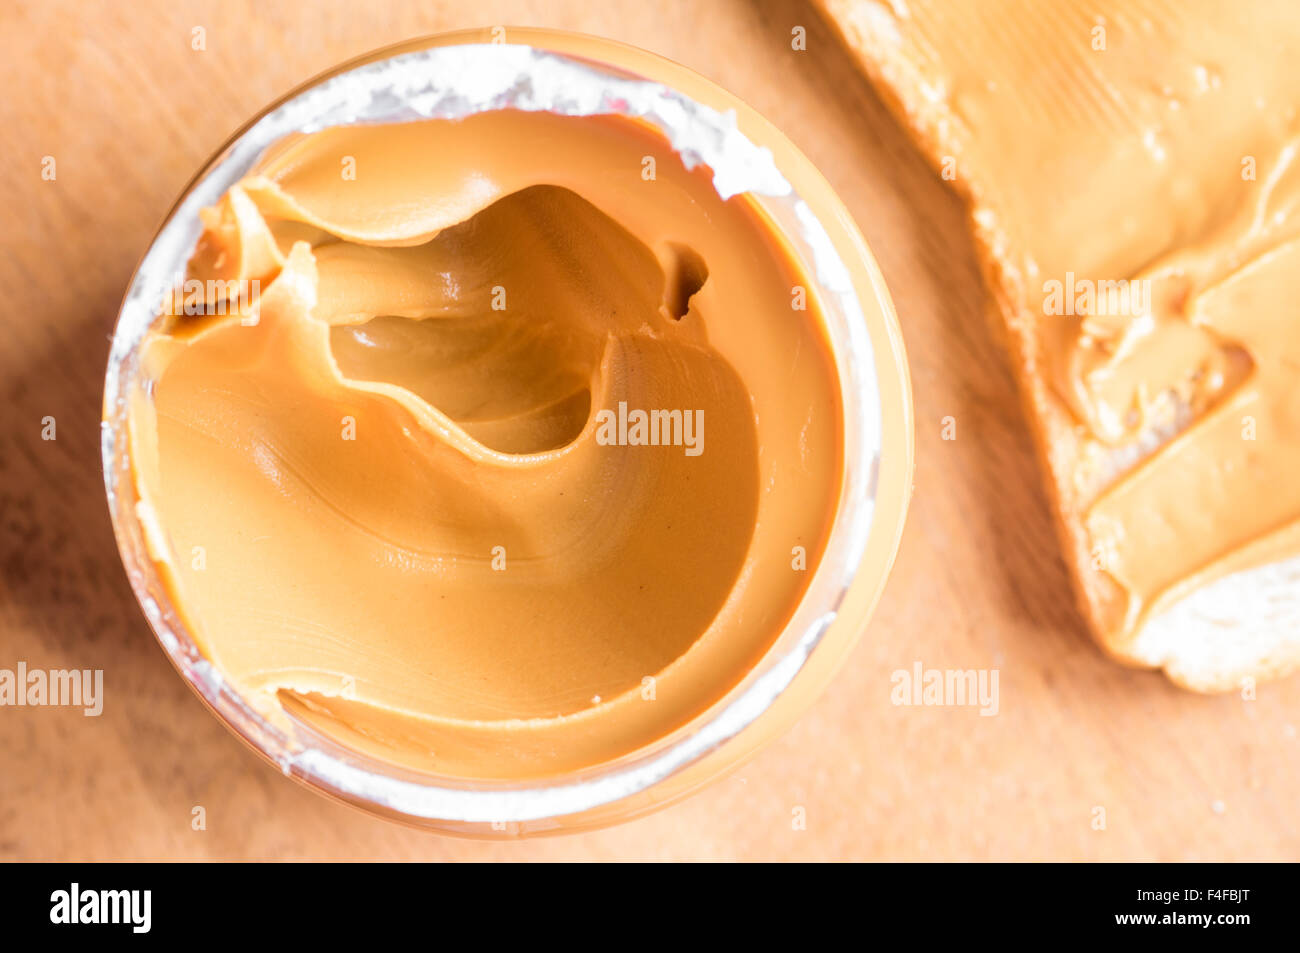 Burro di arachidi jar vista superiore Foto Stock